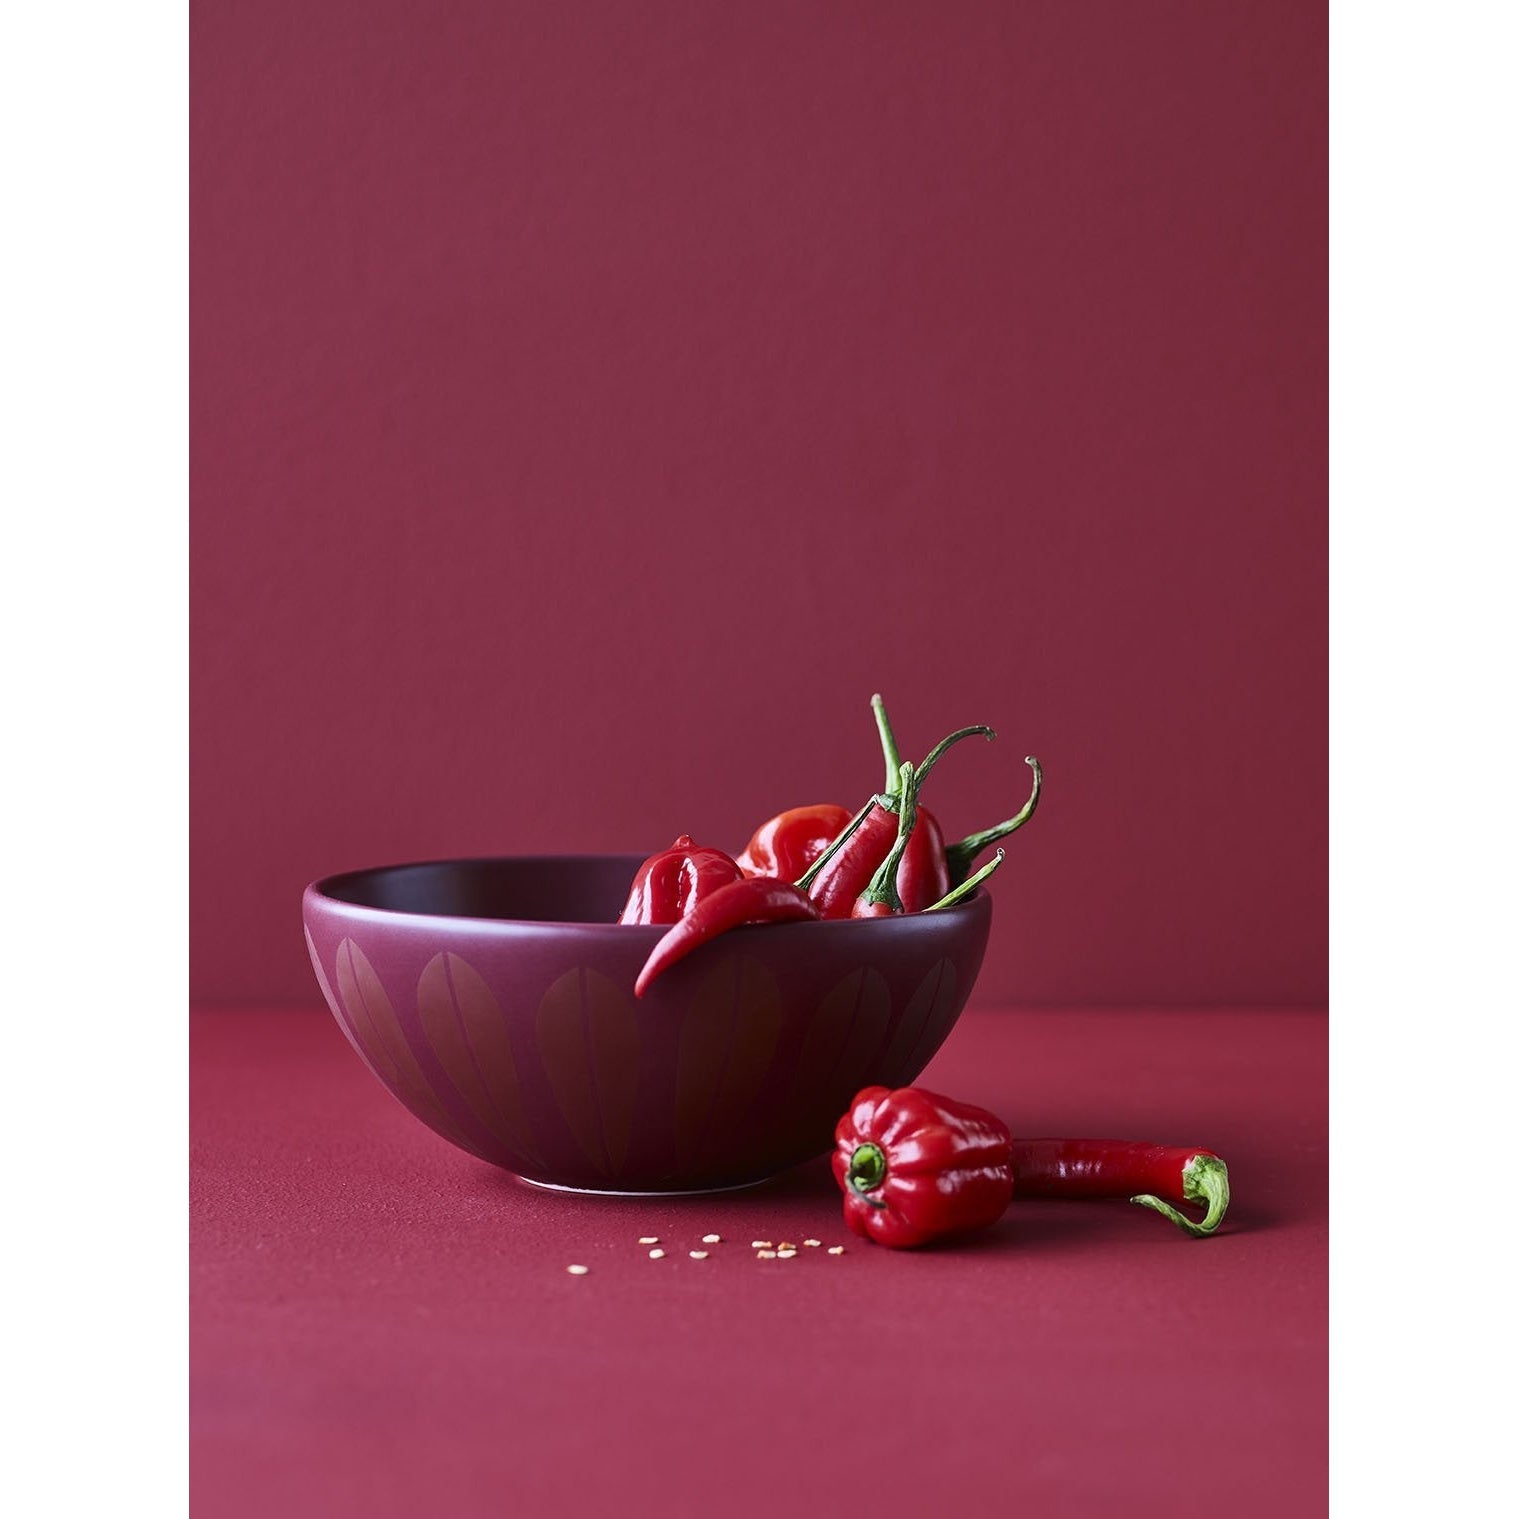 Lucie Kaas Arne Clausen Bowl Dark Red, 21 cm